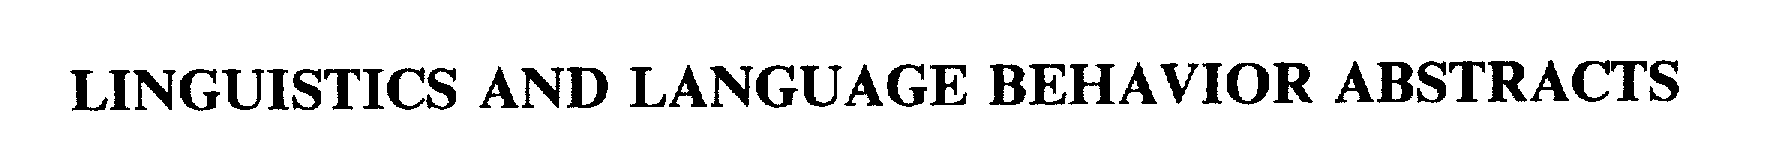 LINGUISTICS AND LANGUAGE BEHAVIOR ABSTRACTS